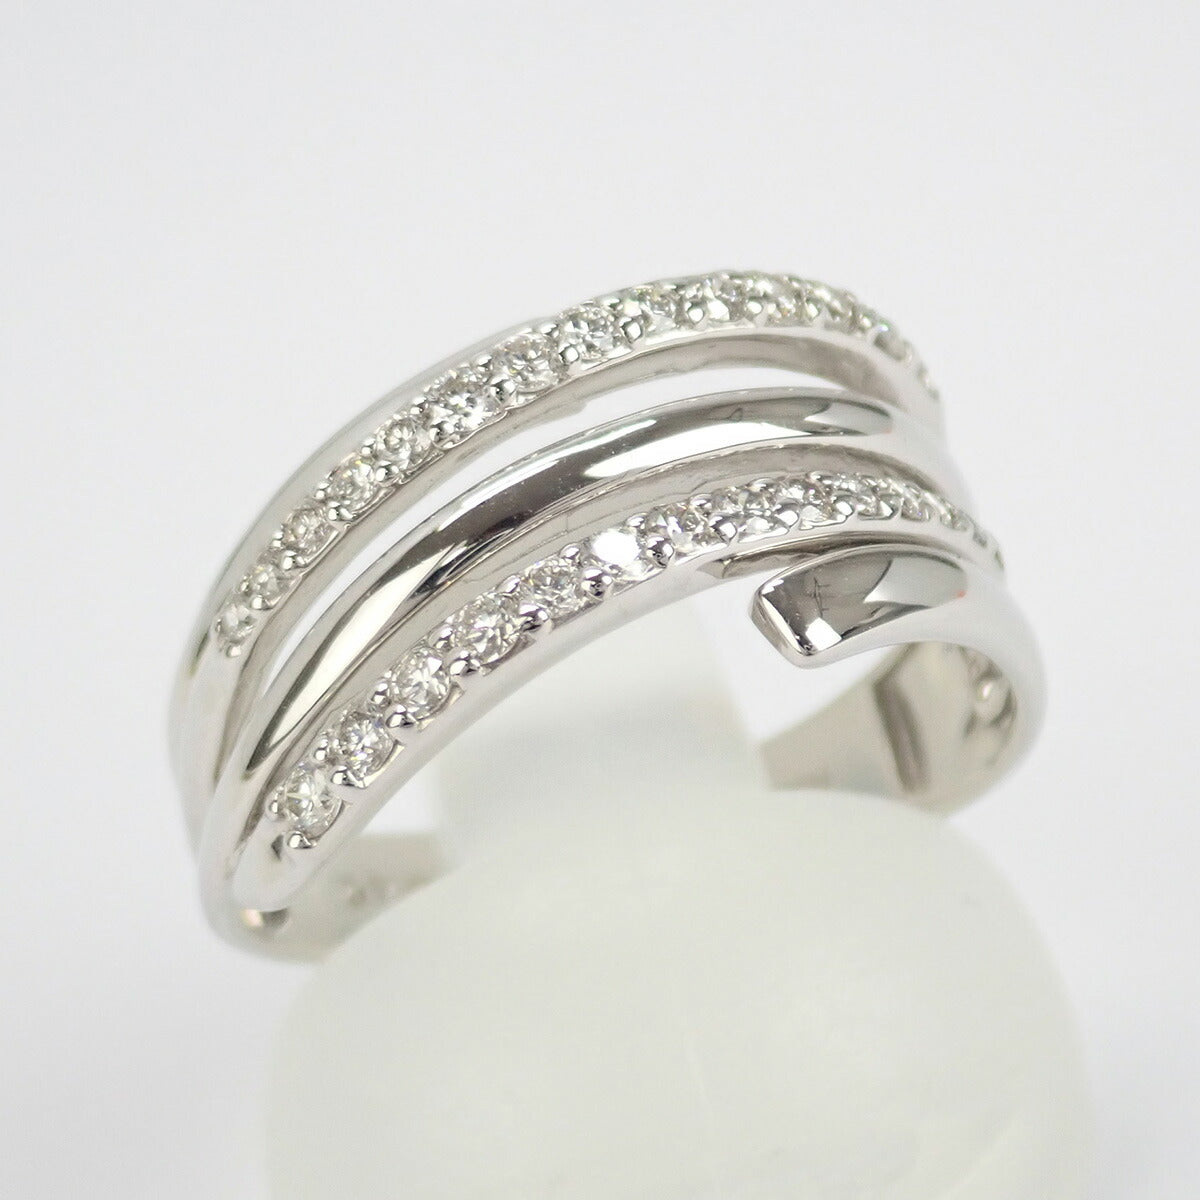 Platinum 900 Diamond Ring, Diamond 0.40ct, Size 12.5, Silver Finish, Ladies (Pre-owned)